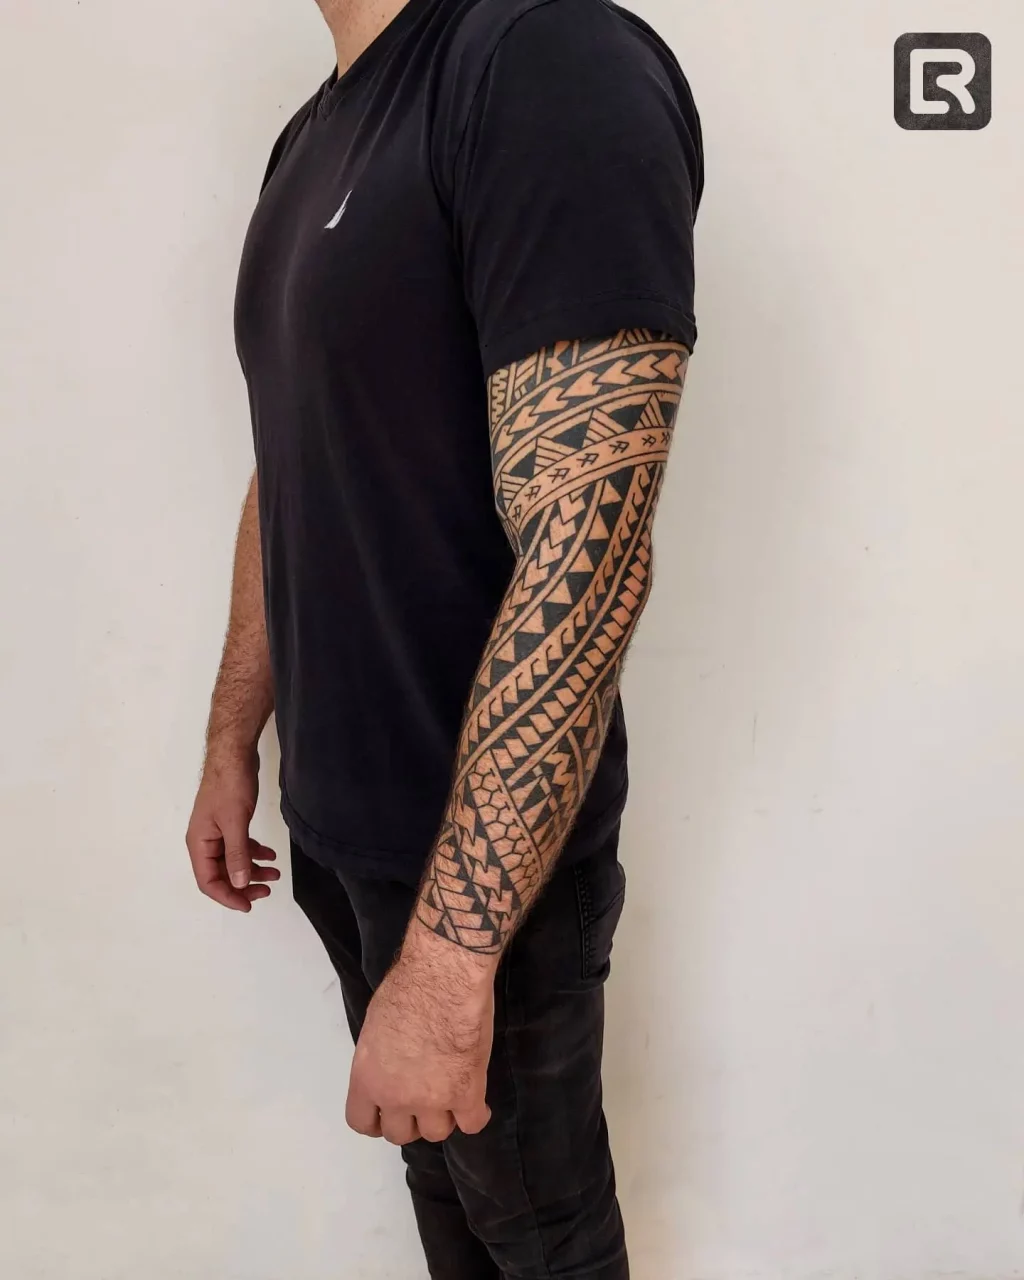 Samoan Tattoo Pattern Over Arm